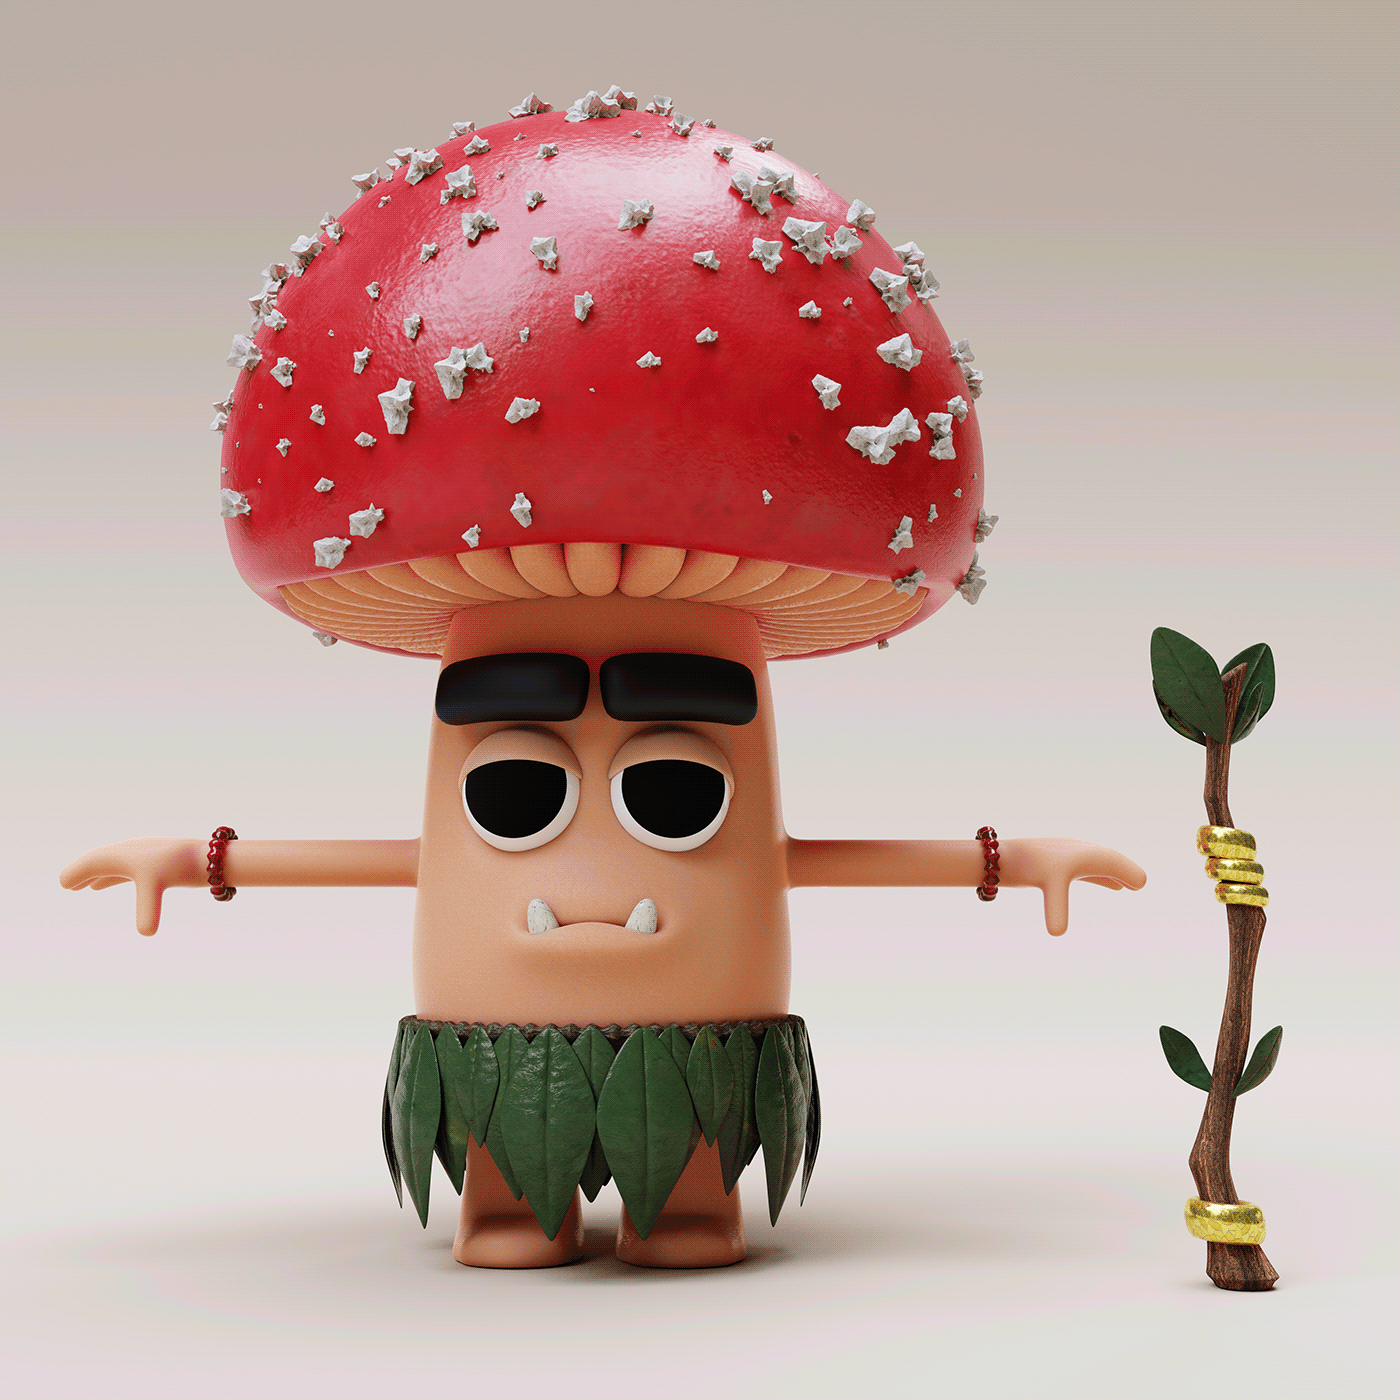 blender Substance Painter 3D Character mushroom cartoon